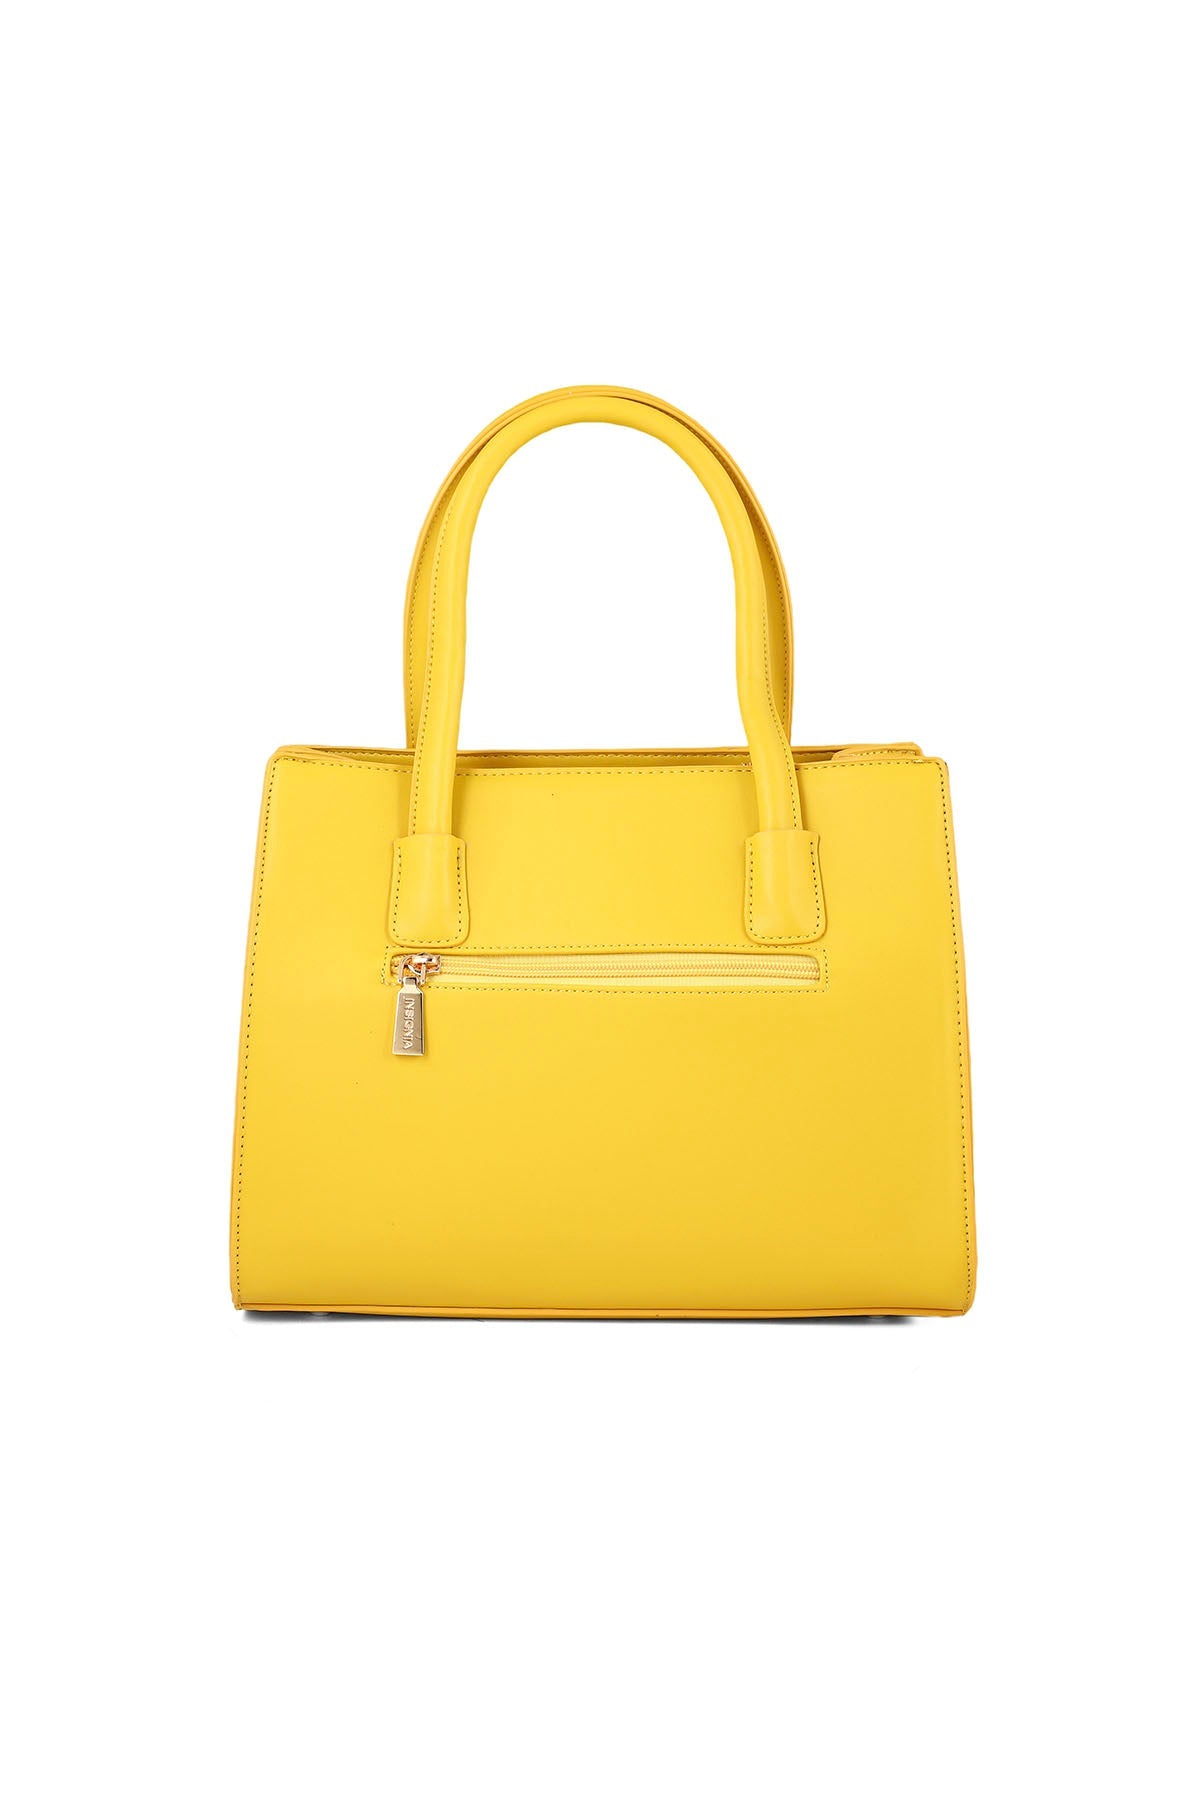 Formal Tote Hand Bags B15129-Yellow